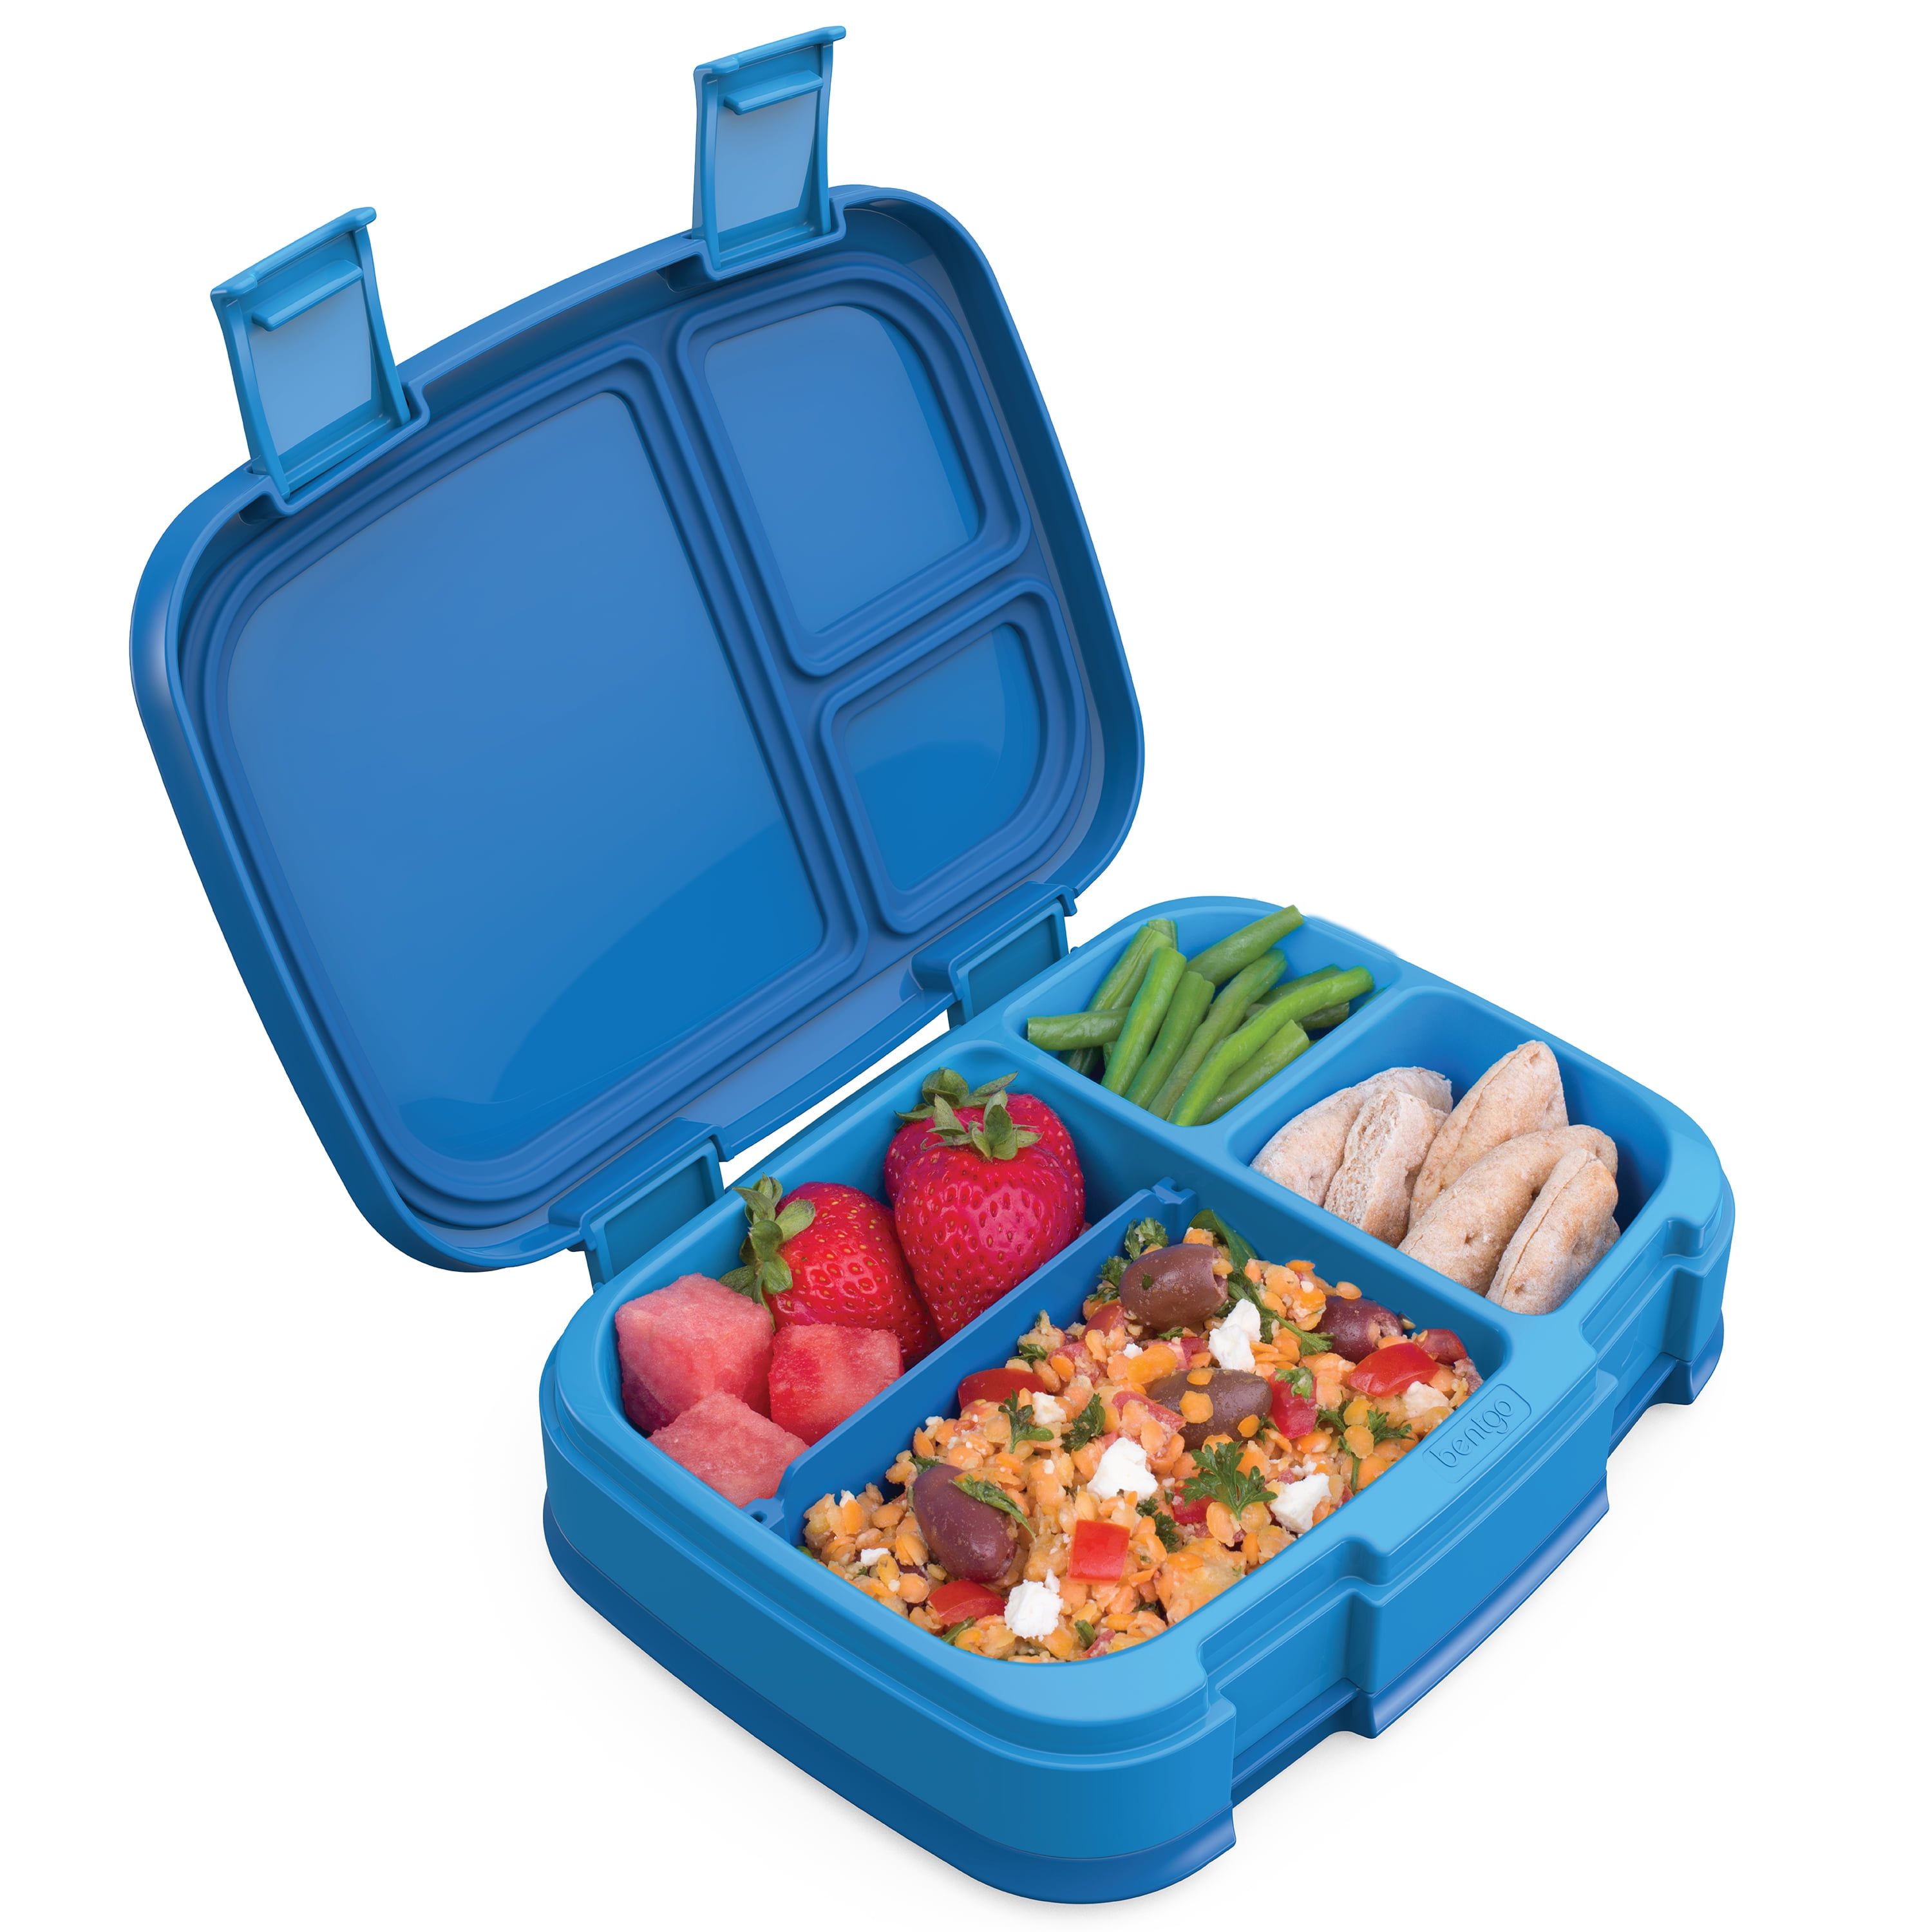 Bentgo® Bento Leak-Proof, 5-Compartment Bento-Style Lunch Box KIDS & Adult